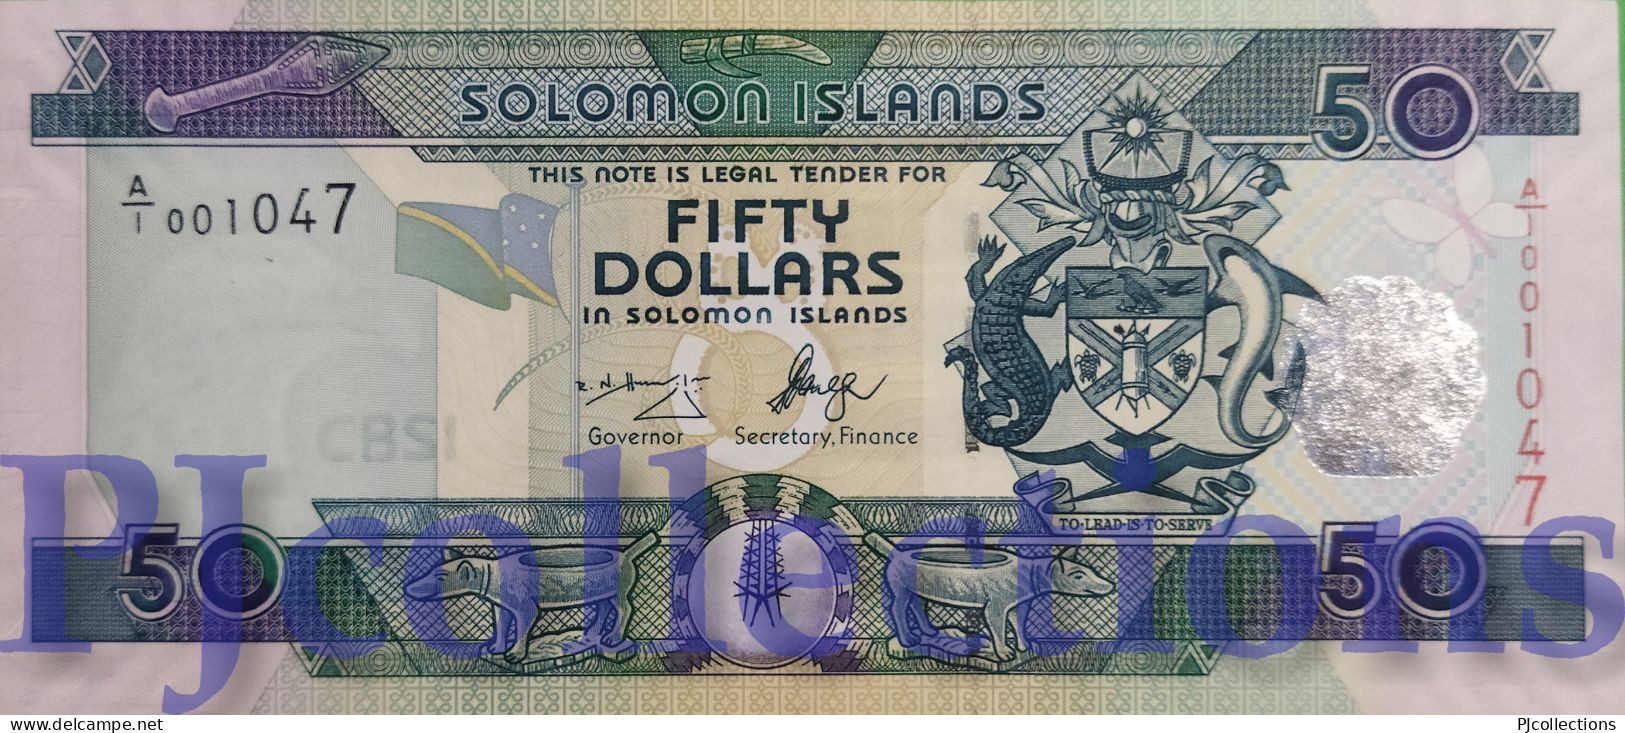 SOLOMON ISLANDS 50 DOLLARS 2004 PICK 29 UNC LOW SERIAL NUMBER "A/1 001038" - Isla Salomon